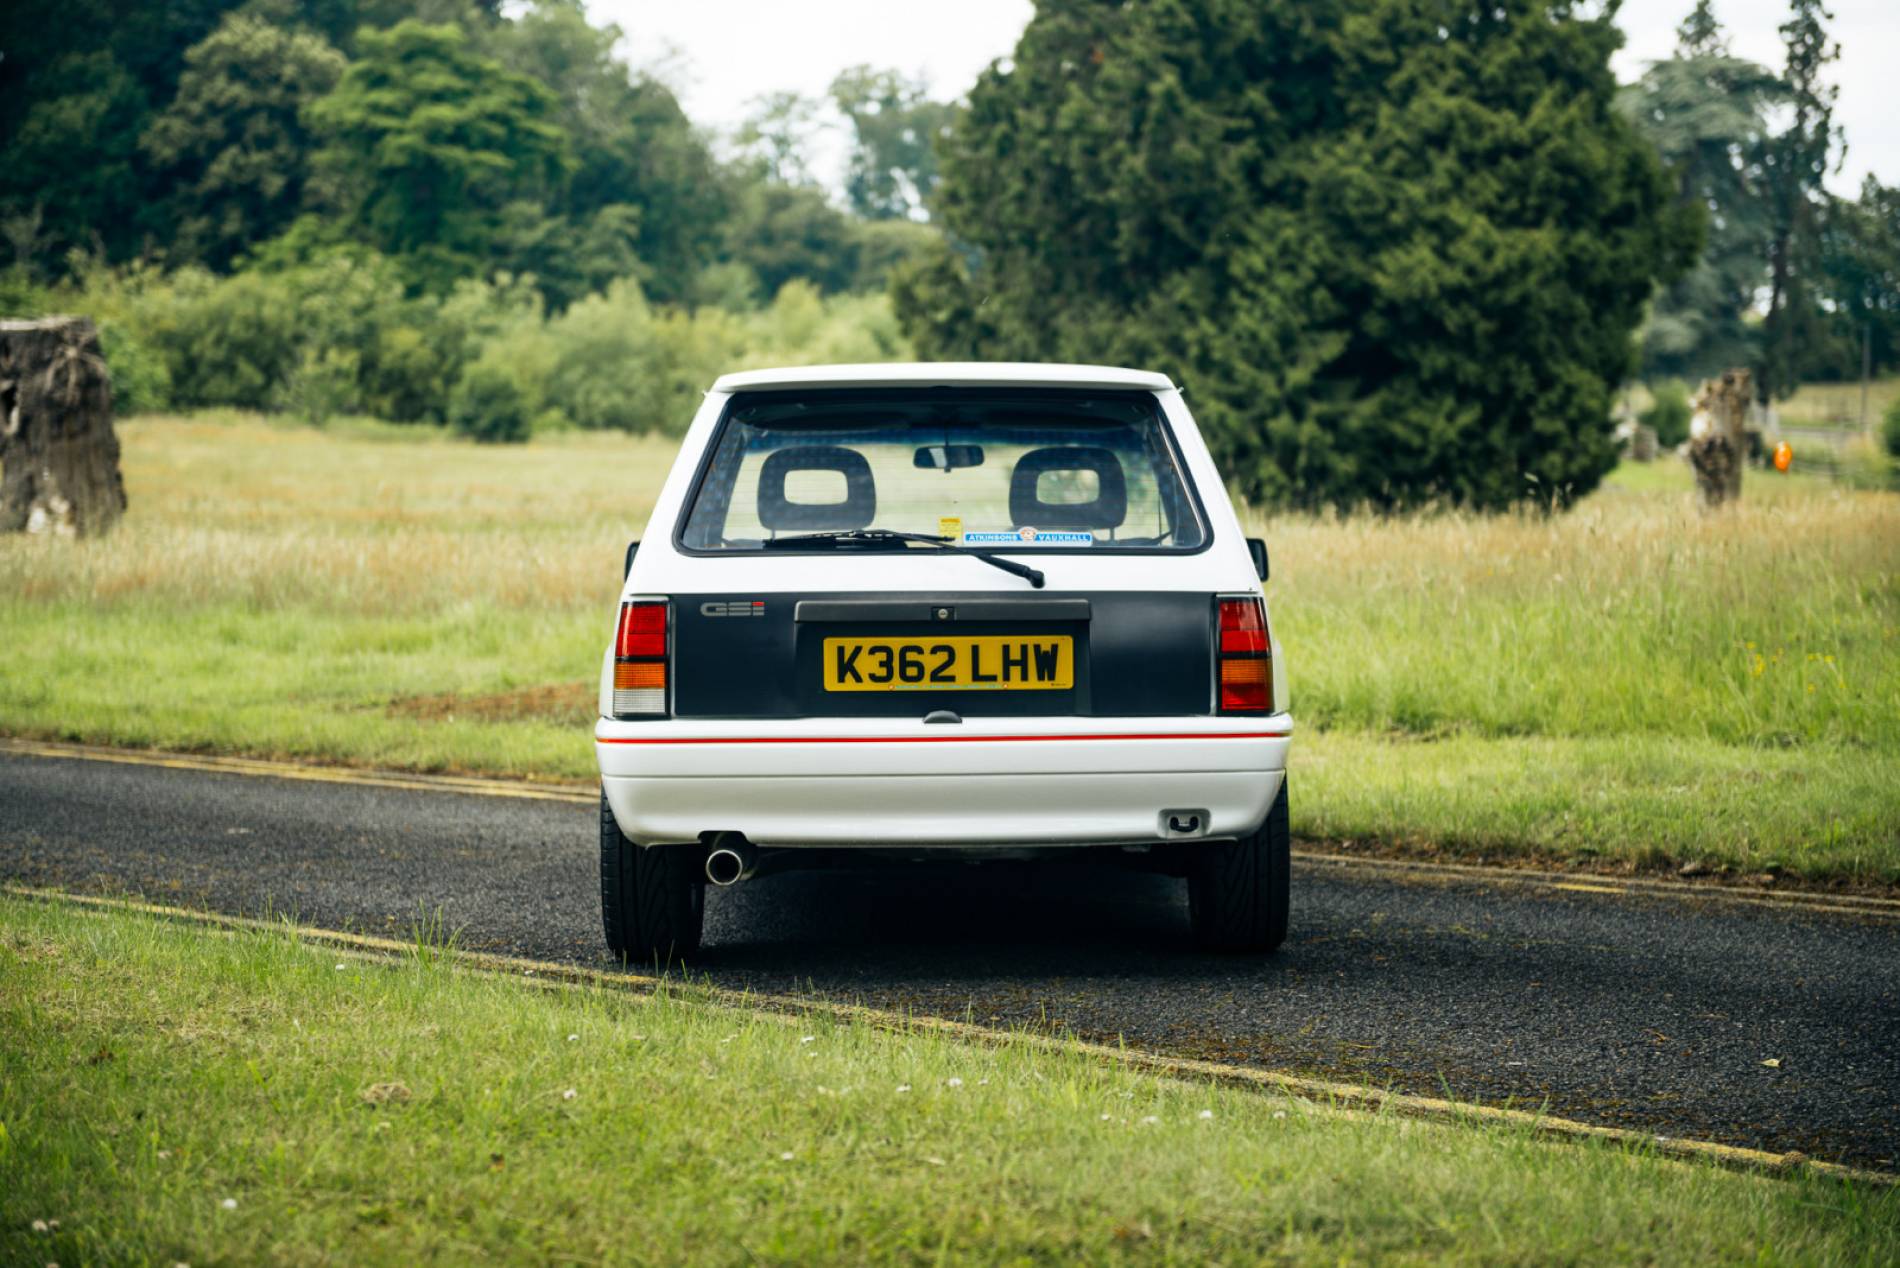 1992 Vauxhall Nova GSi